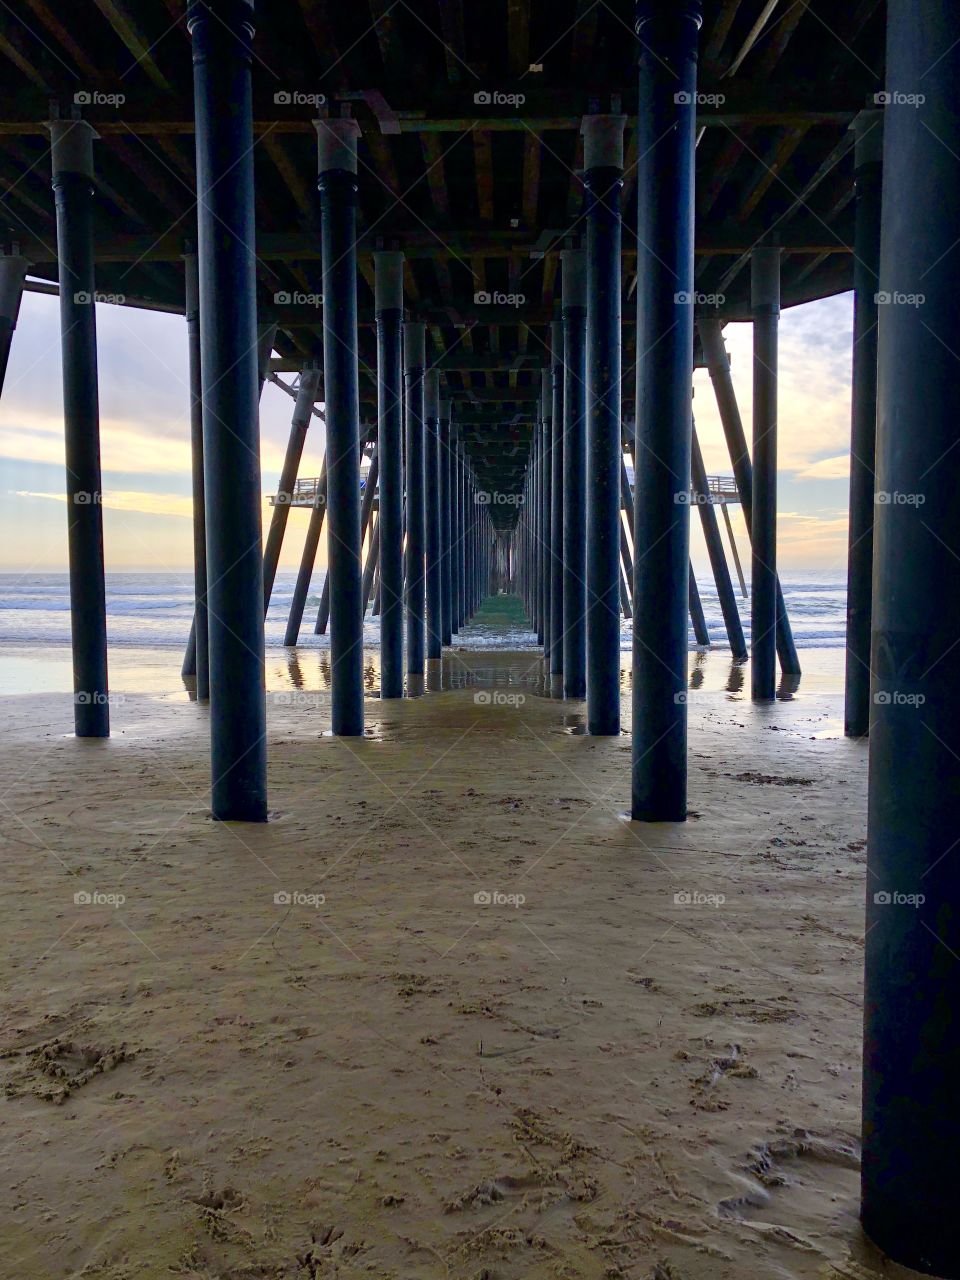 Beauty under the pier